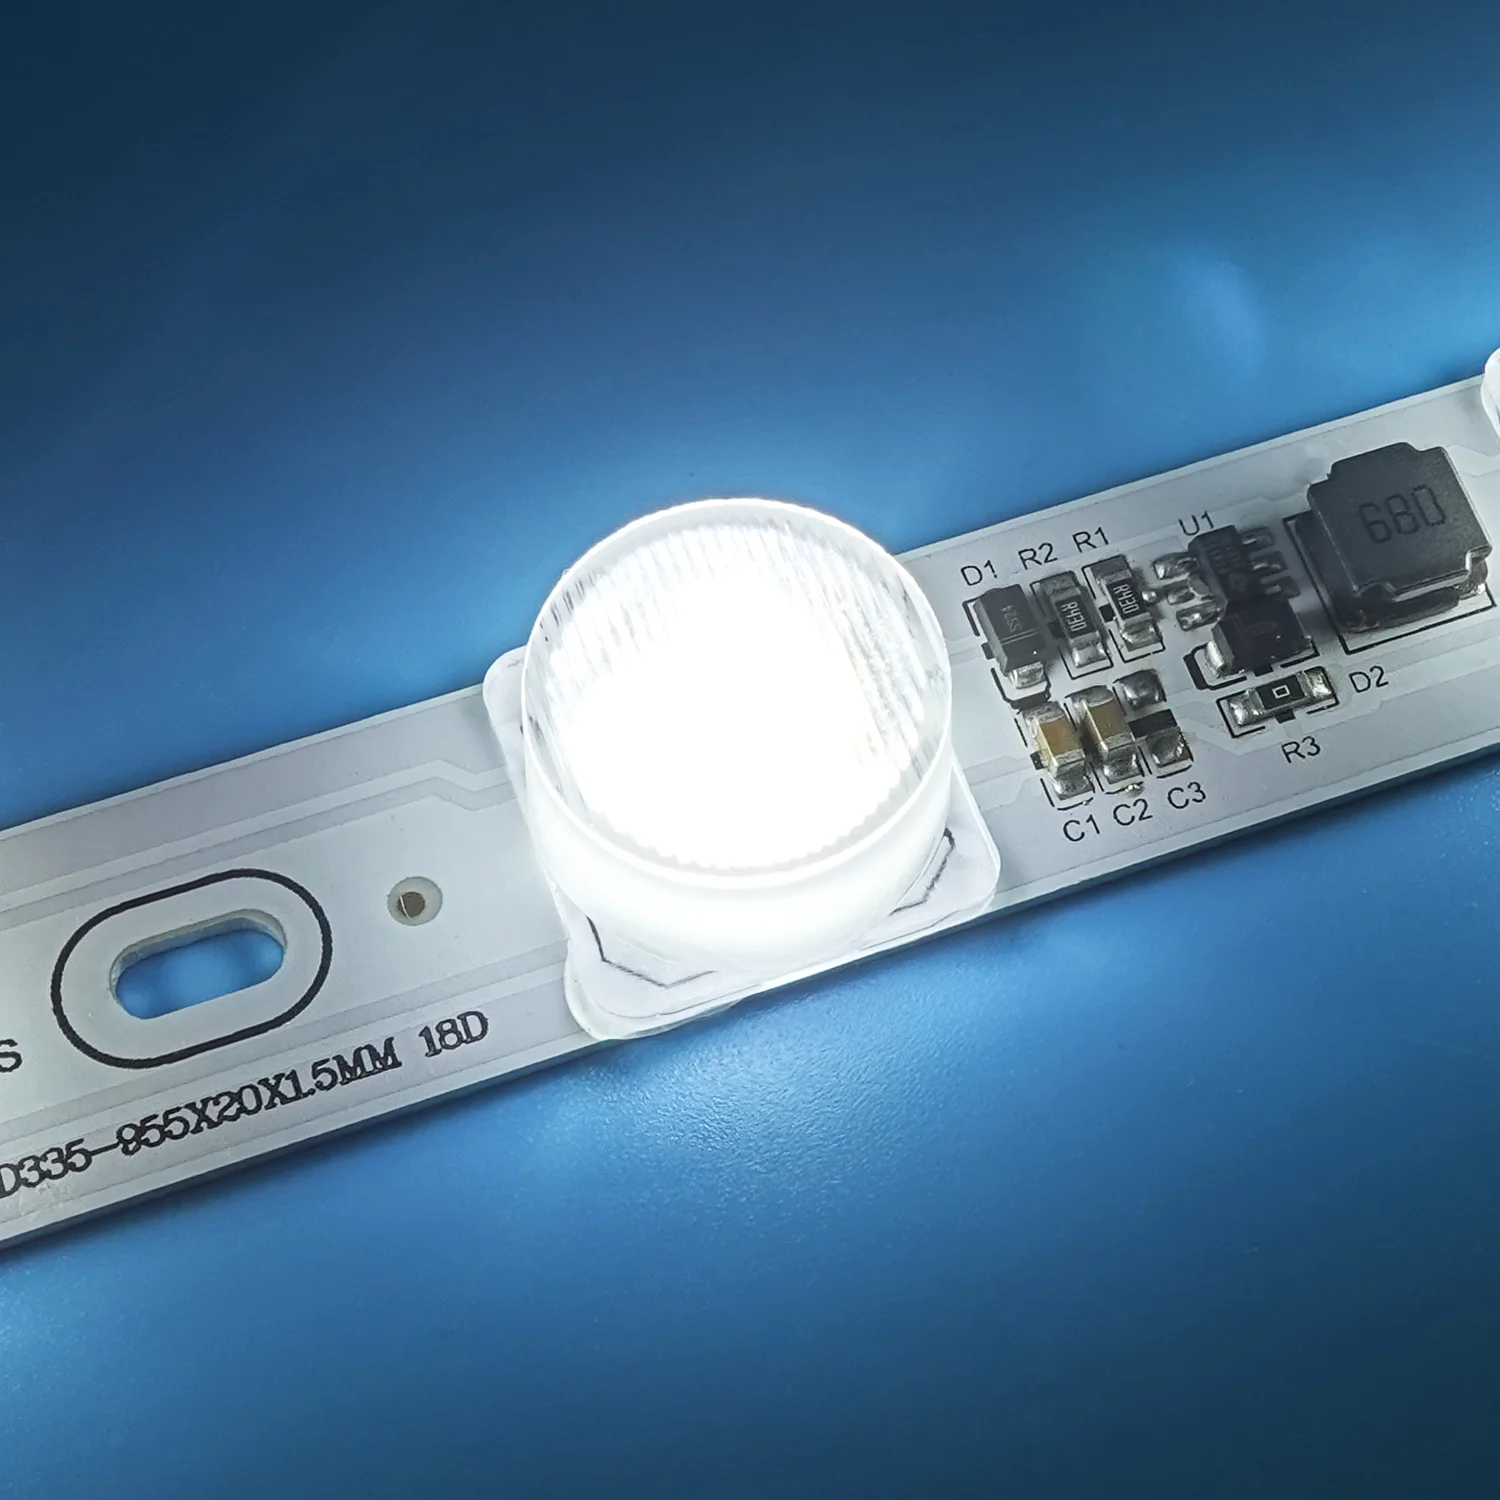 hot sale led edge lit bar led sidelight bar for led lightbox smd3030 strip aluminum profile led strip light